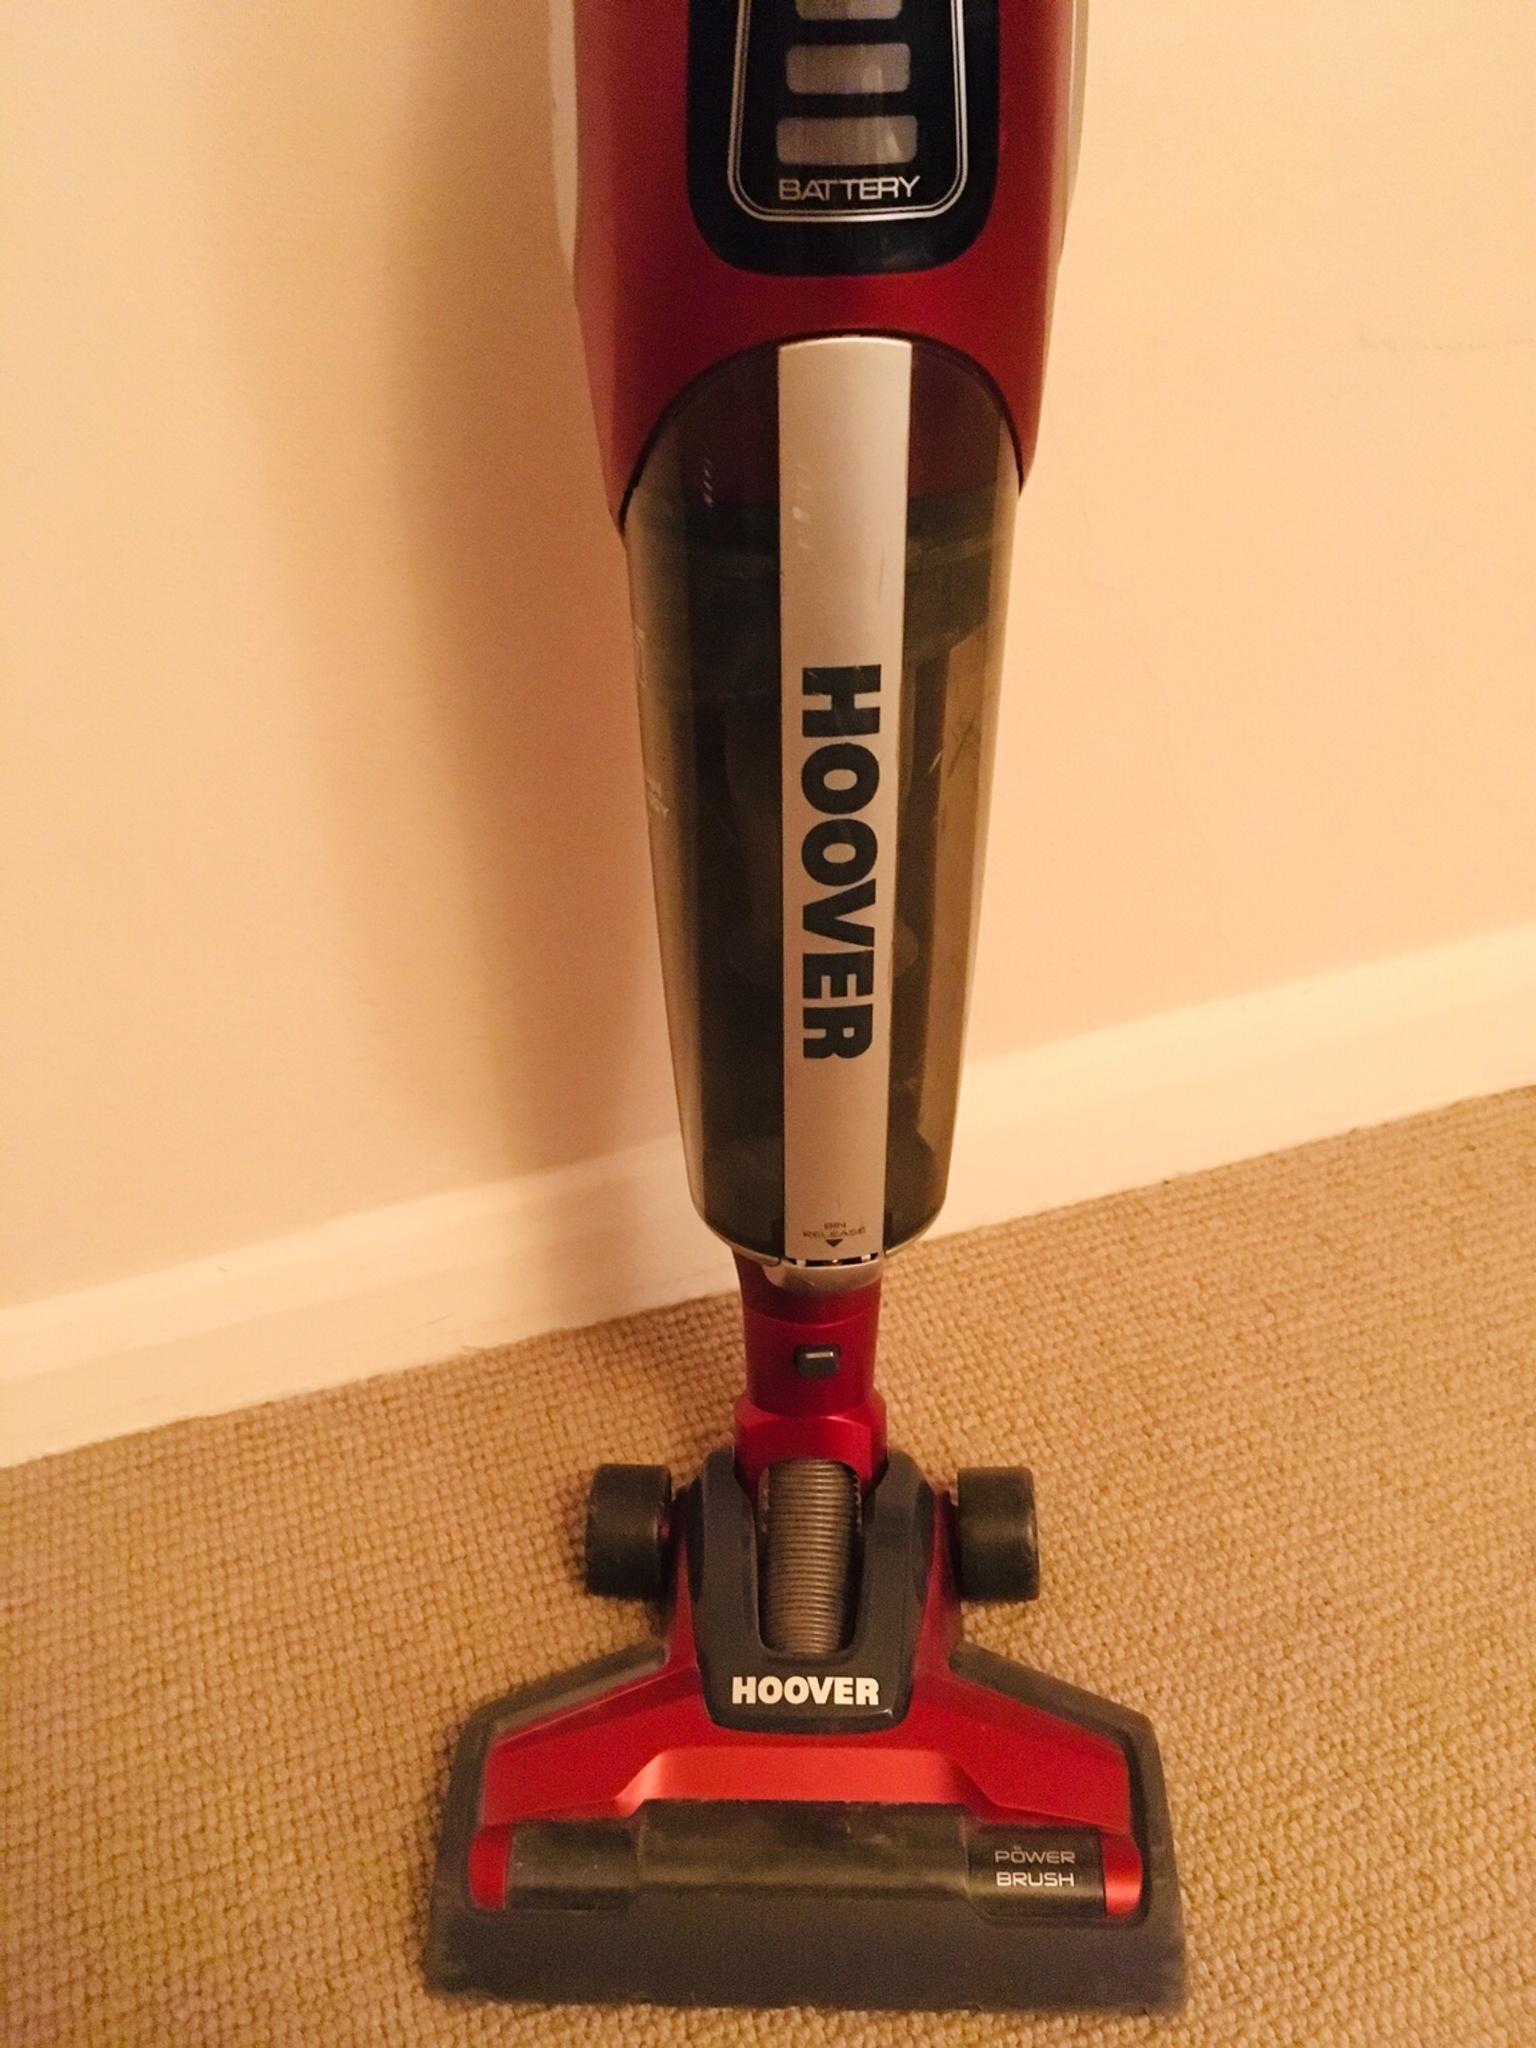 Hoover Cordless Vacuum Hard Floors In Ec1v London Fur 15 00